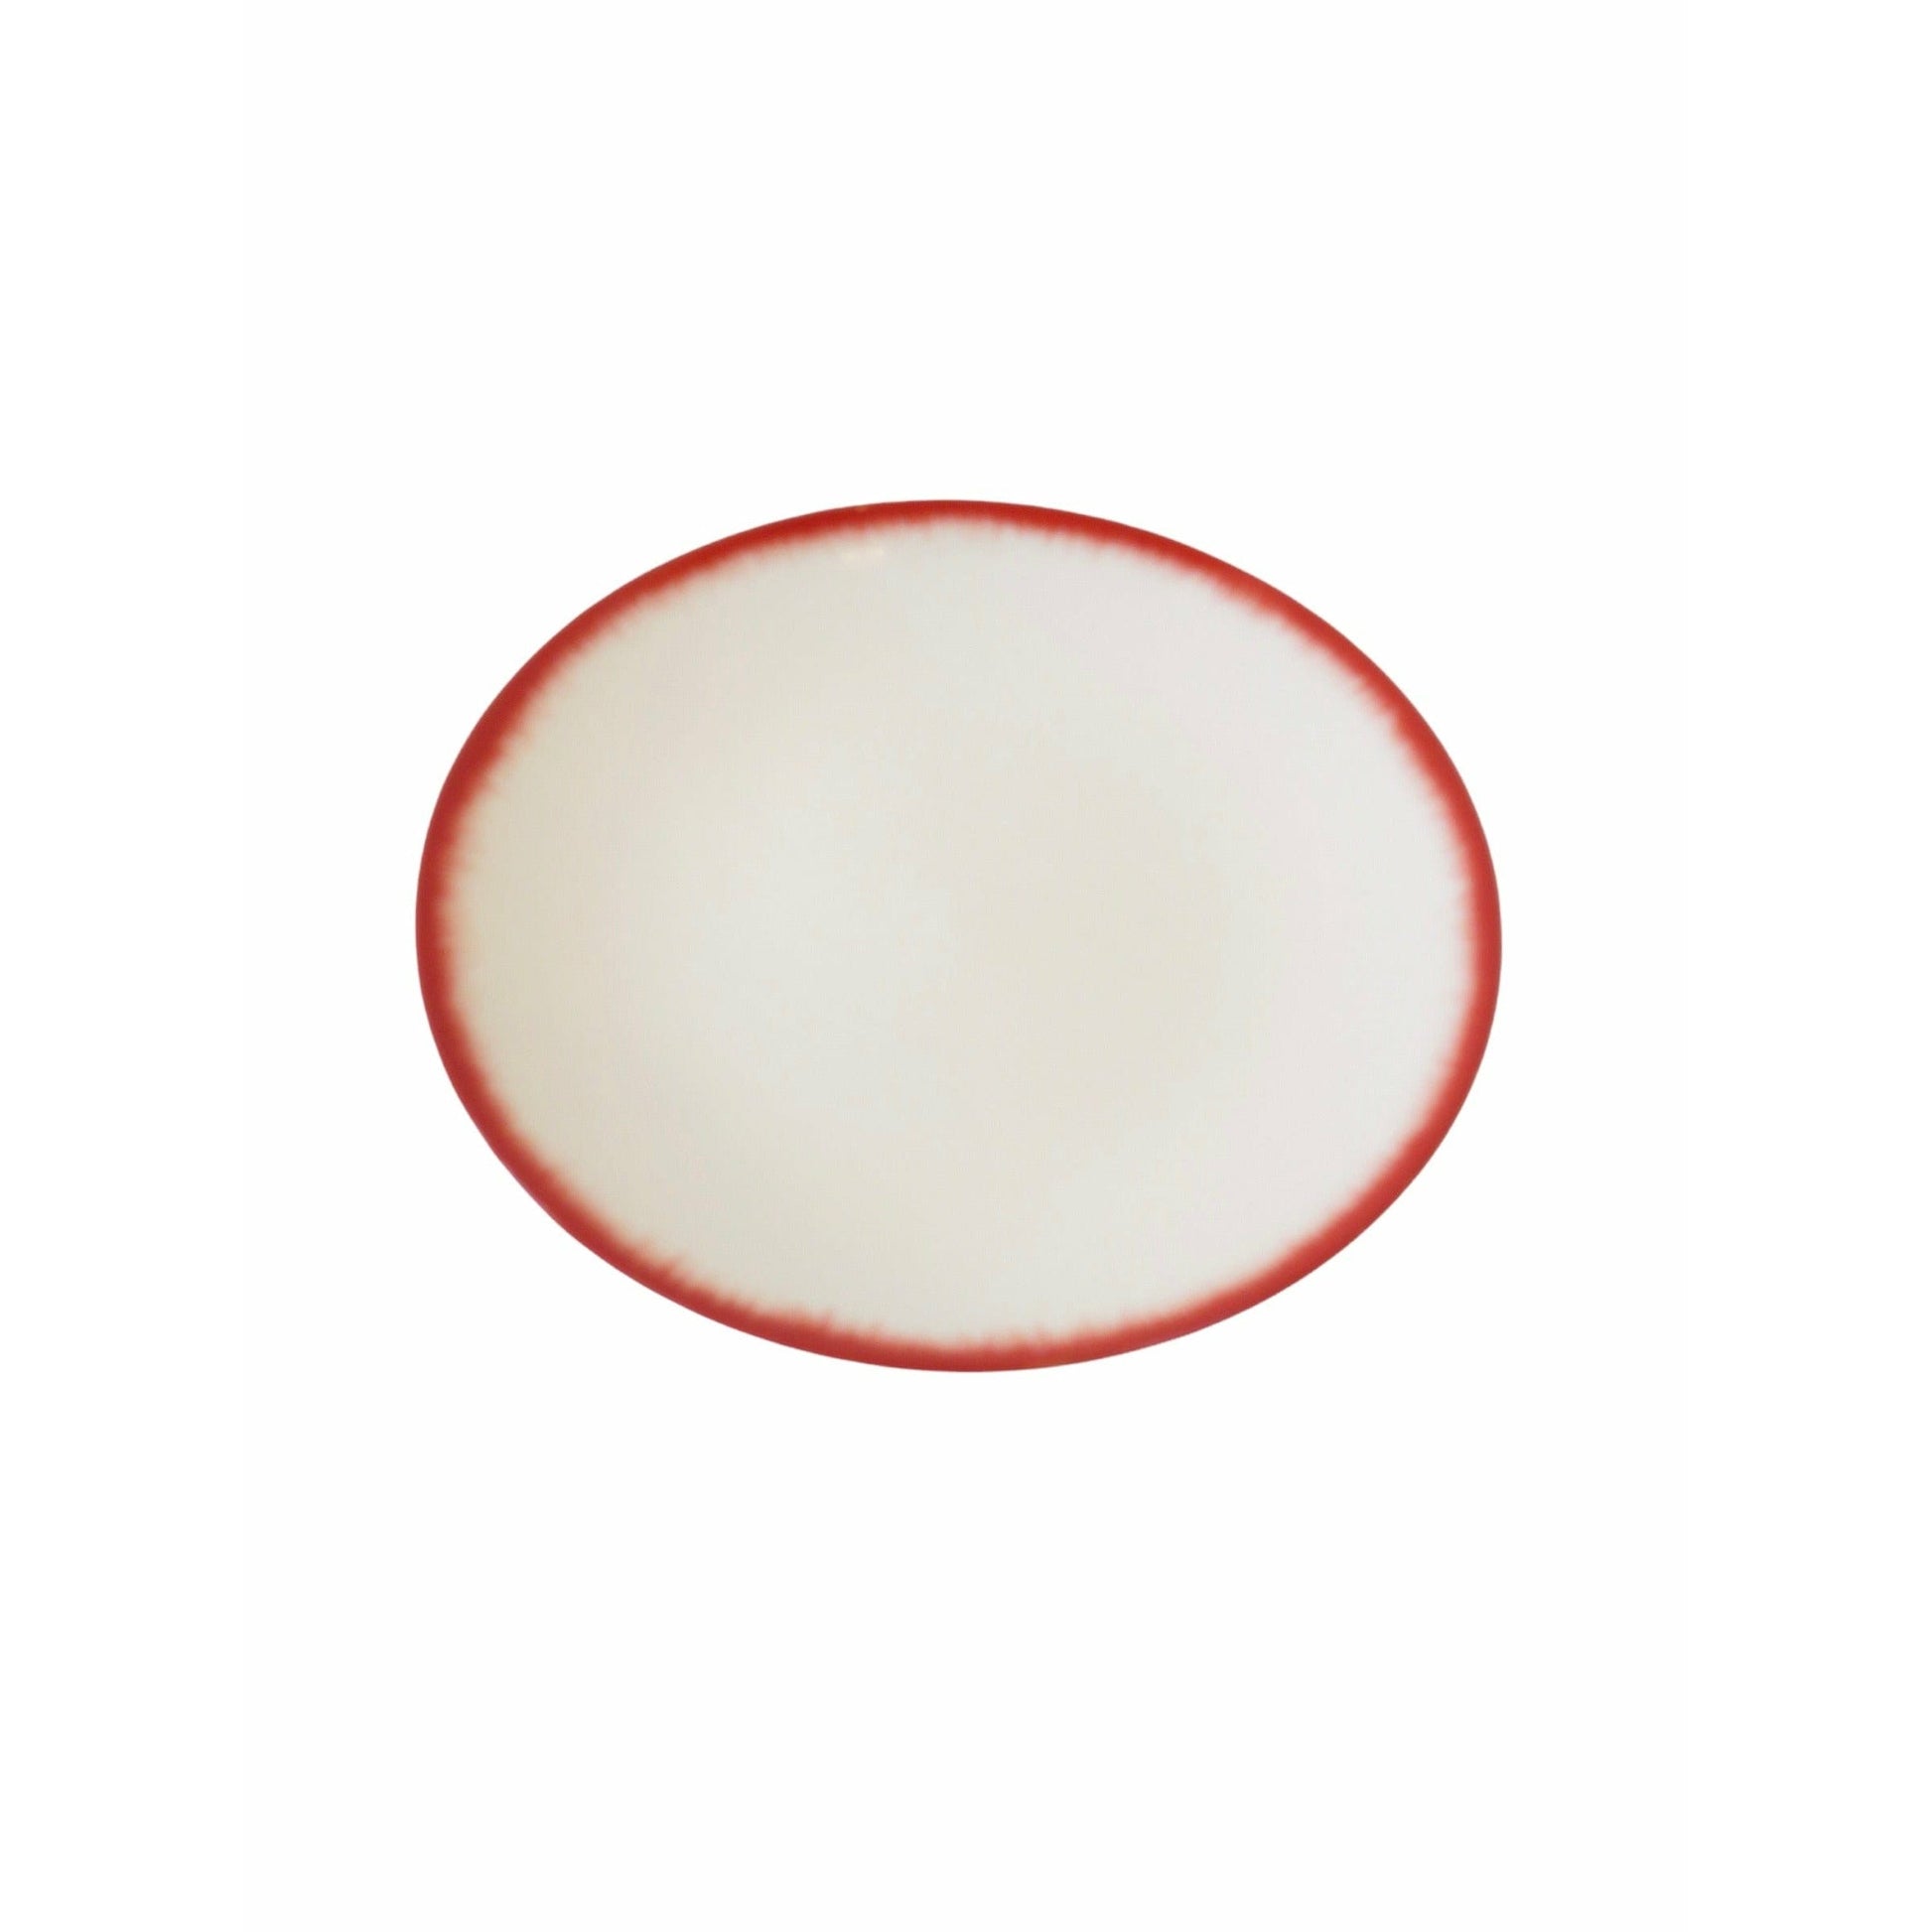 Ann Demeulemeester Home Plates 14 centimeter / Off-white & red / Porcelain Ann Demeulemeester for Serax 14 cm plate (set of two)